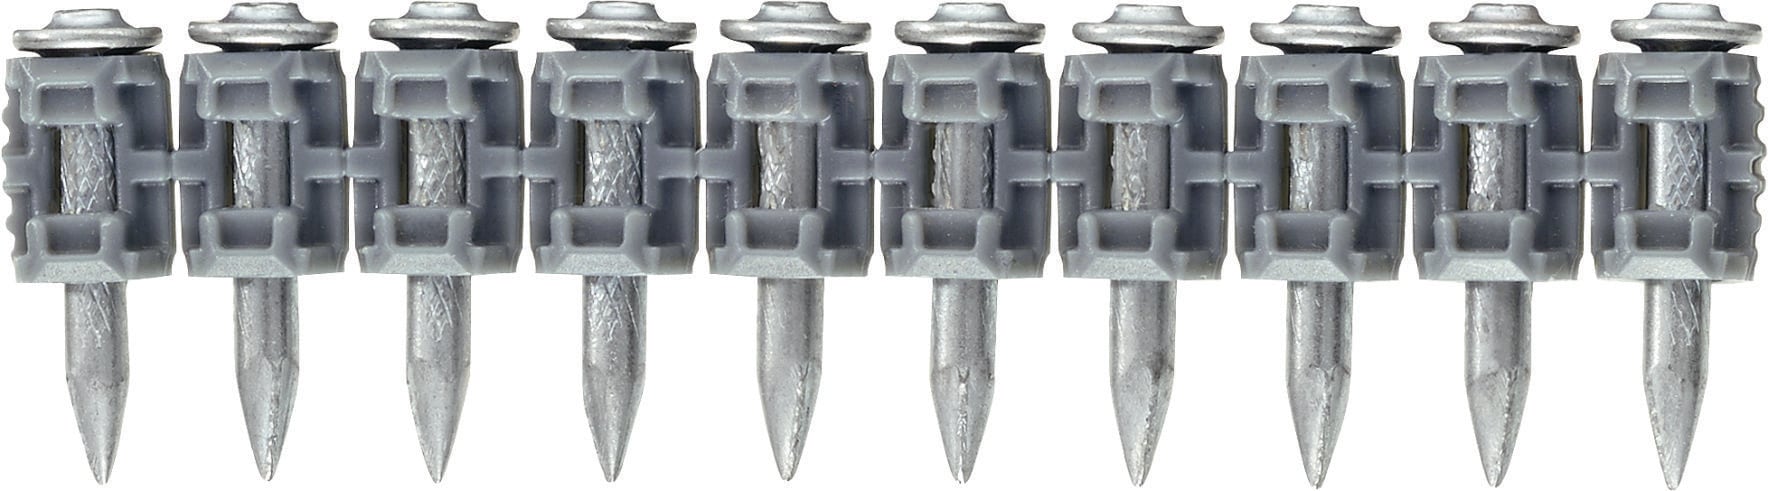 X-GN MX Concrete nails (collated) - Nails - Hilti Canada